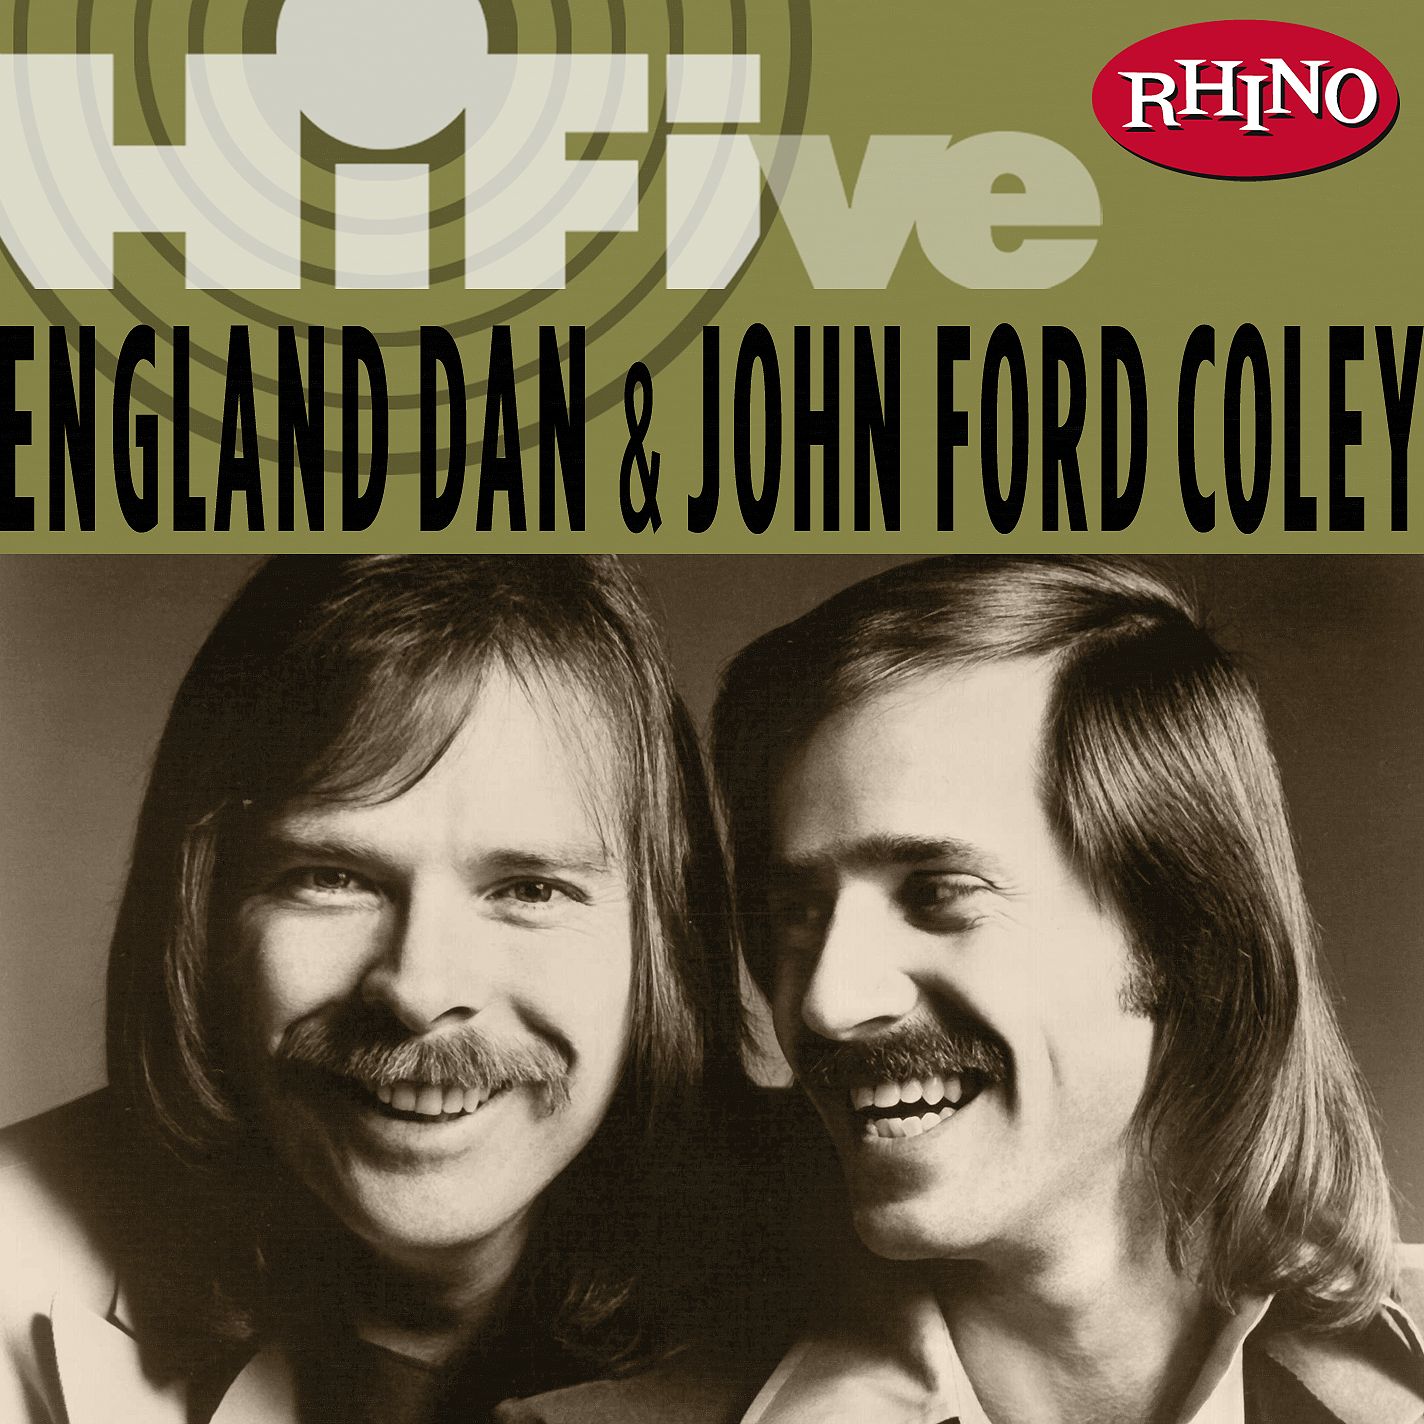 England dan john ford coley greatest hits #4